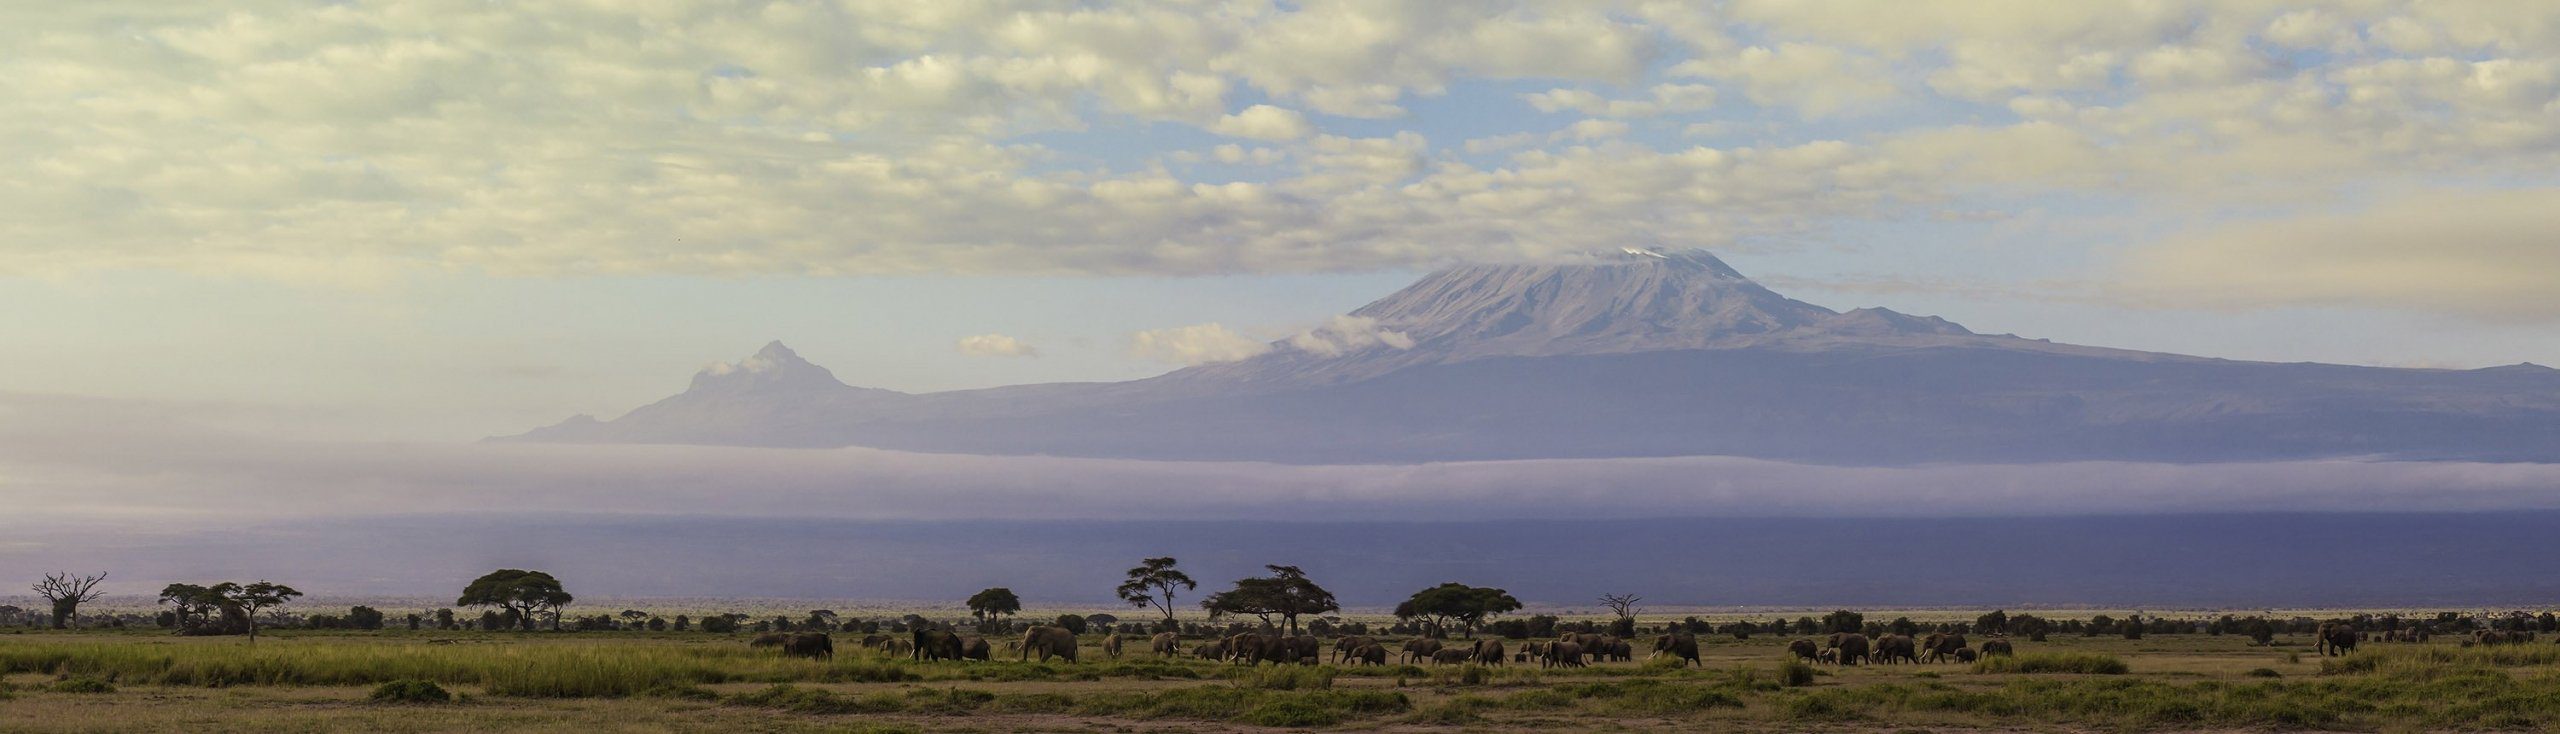 News Fly Paragliding Kilimanjaro scaled